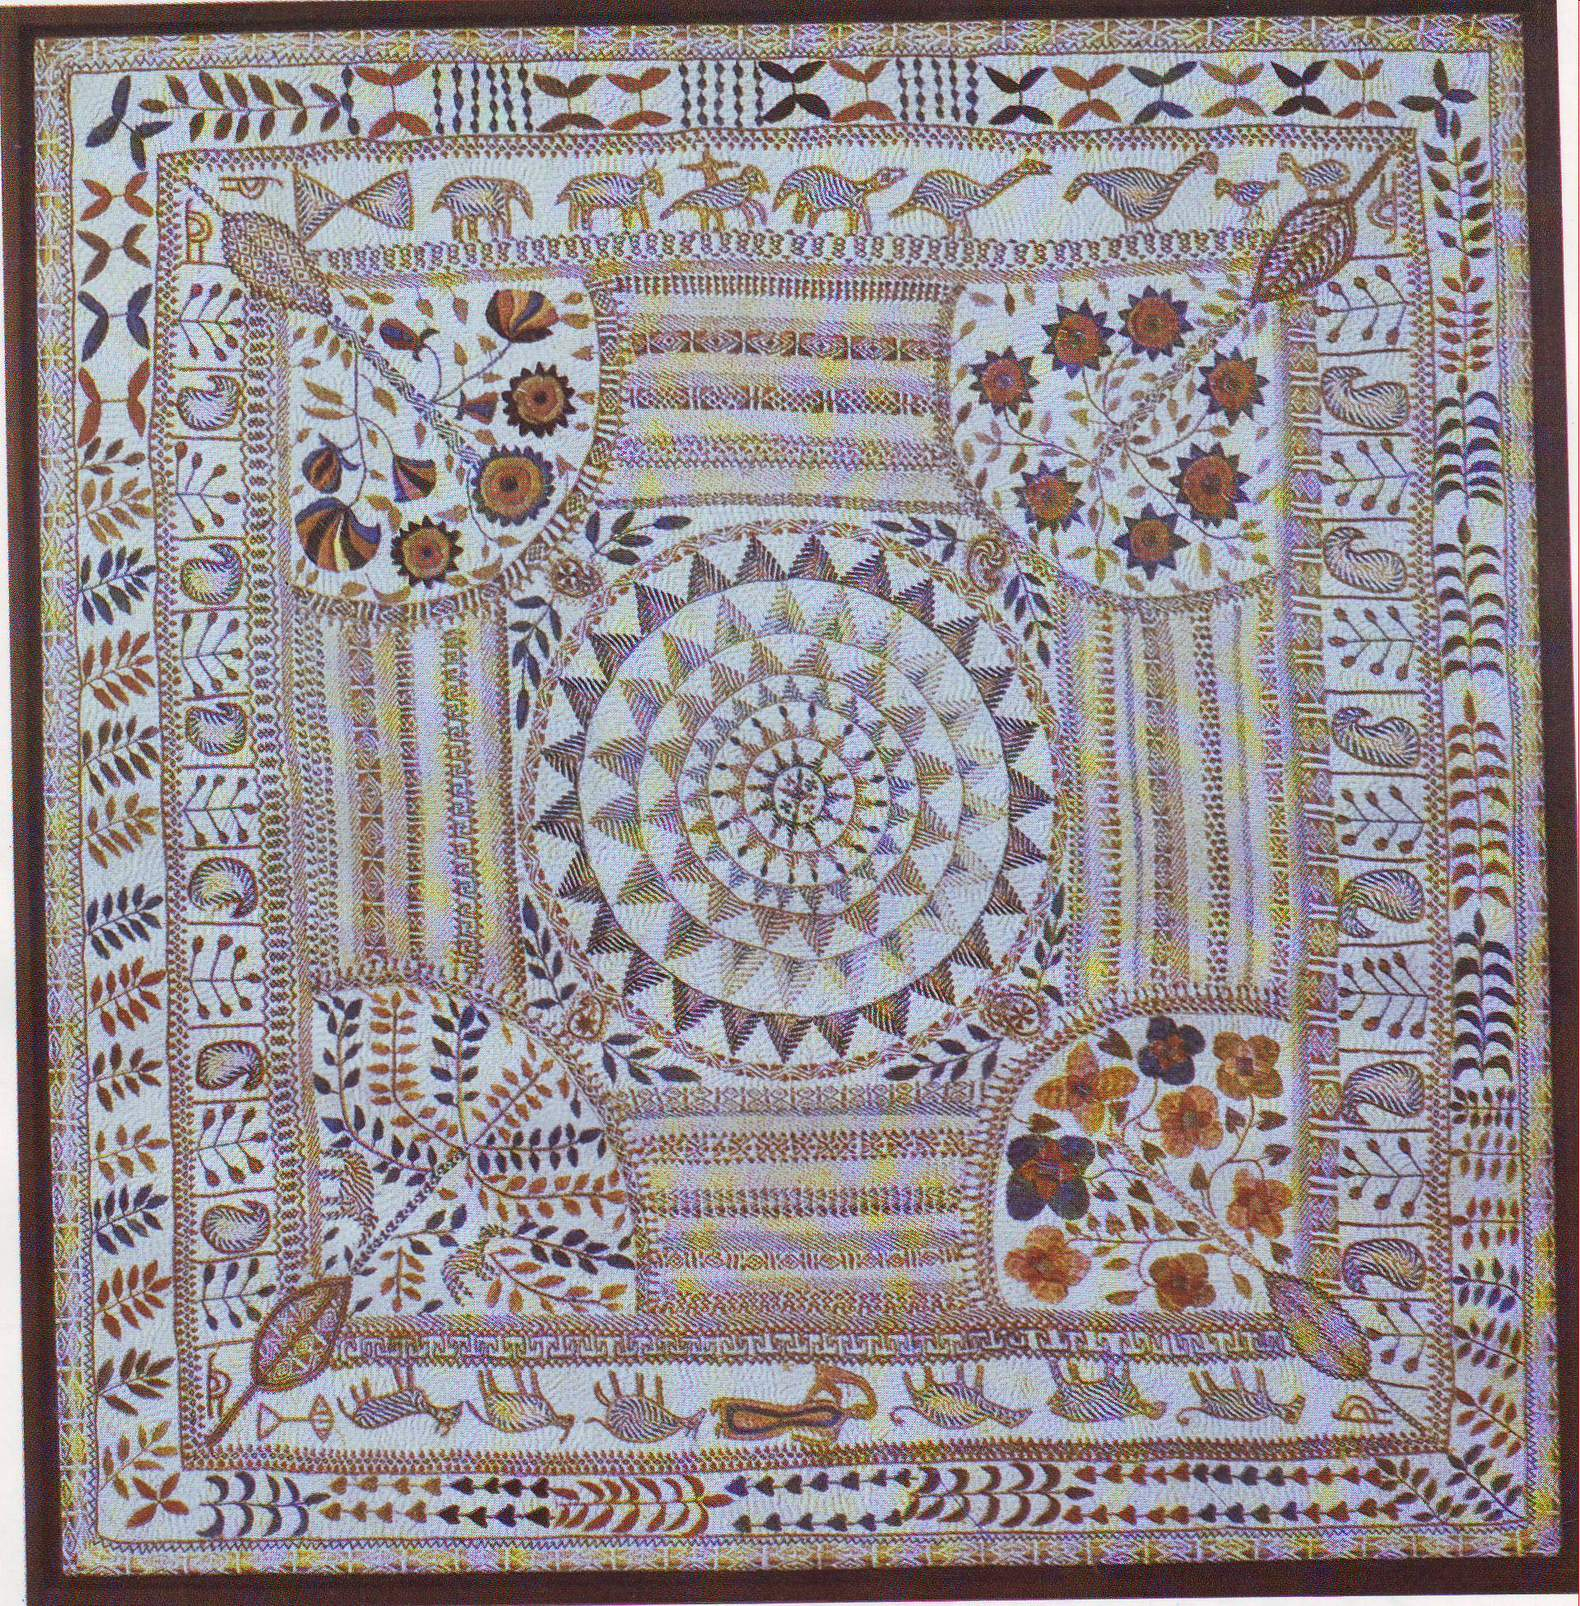 Indian Embroidery Patterns & Design Nakshi Kantha Wikipedia